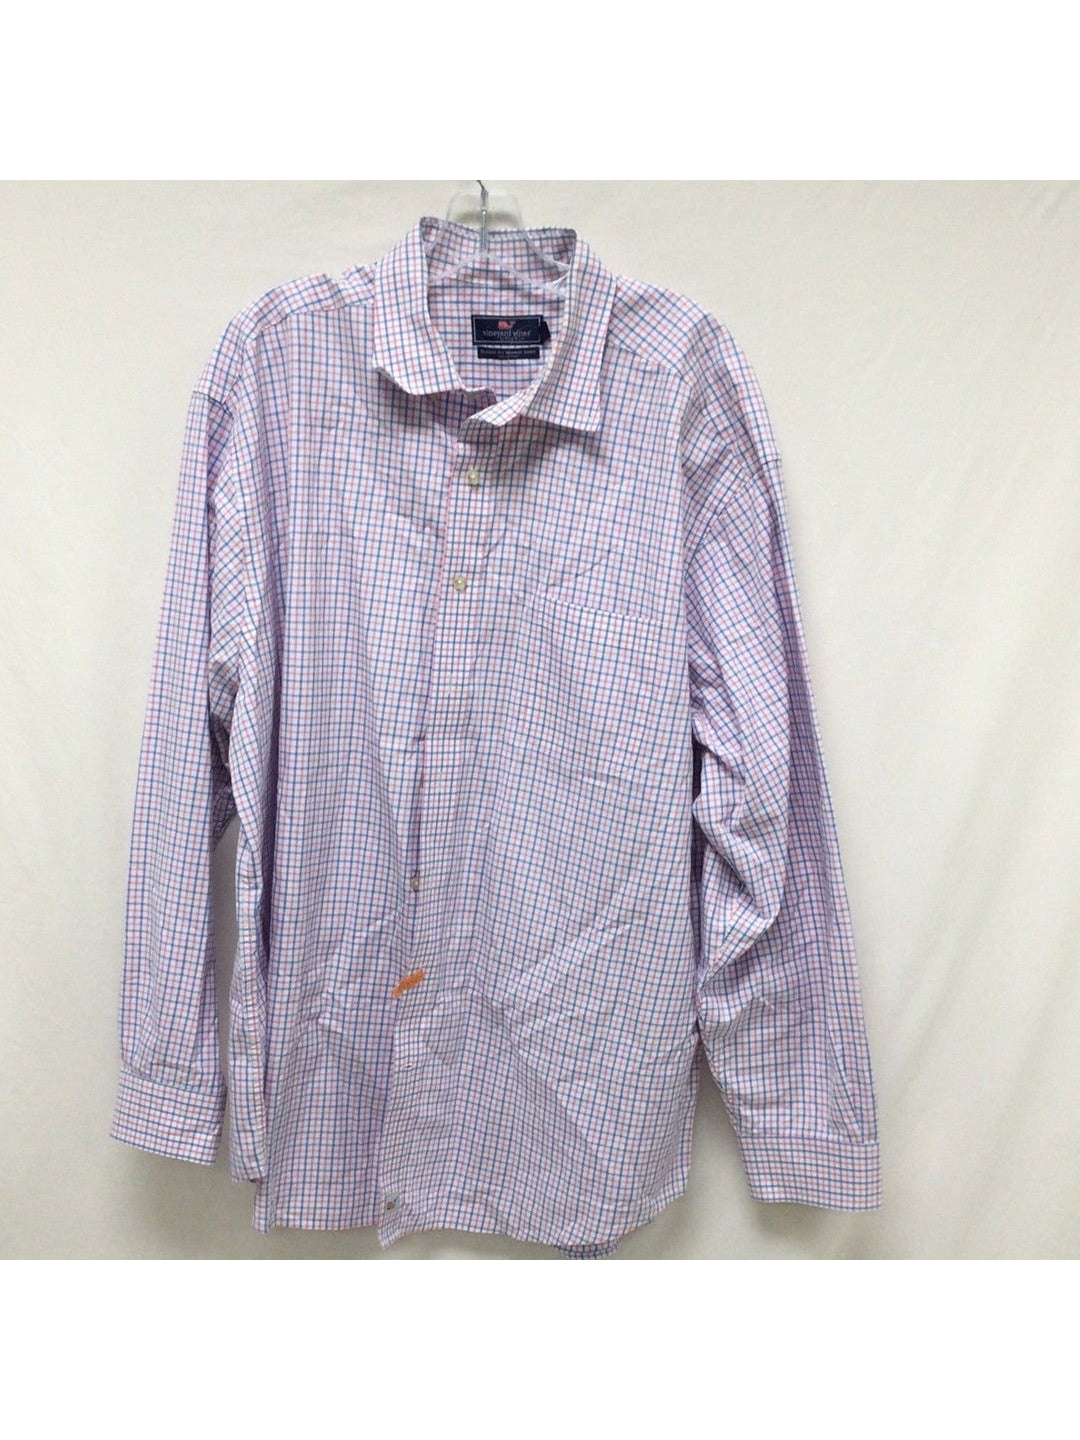 Vineyard Vines Men's Dress long Sleeve Shirt 2XL plaid - The Kennedy Collective Thrift - 